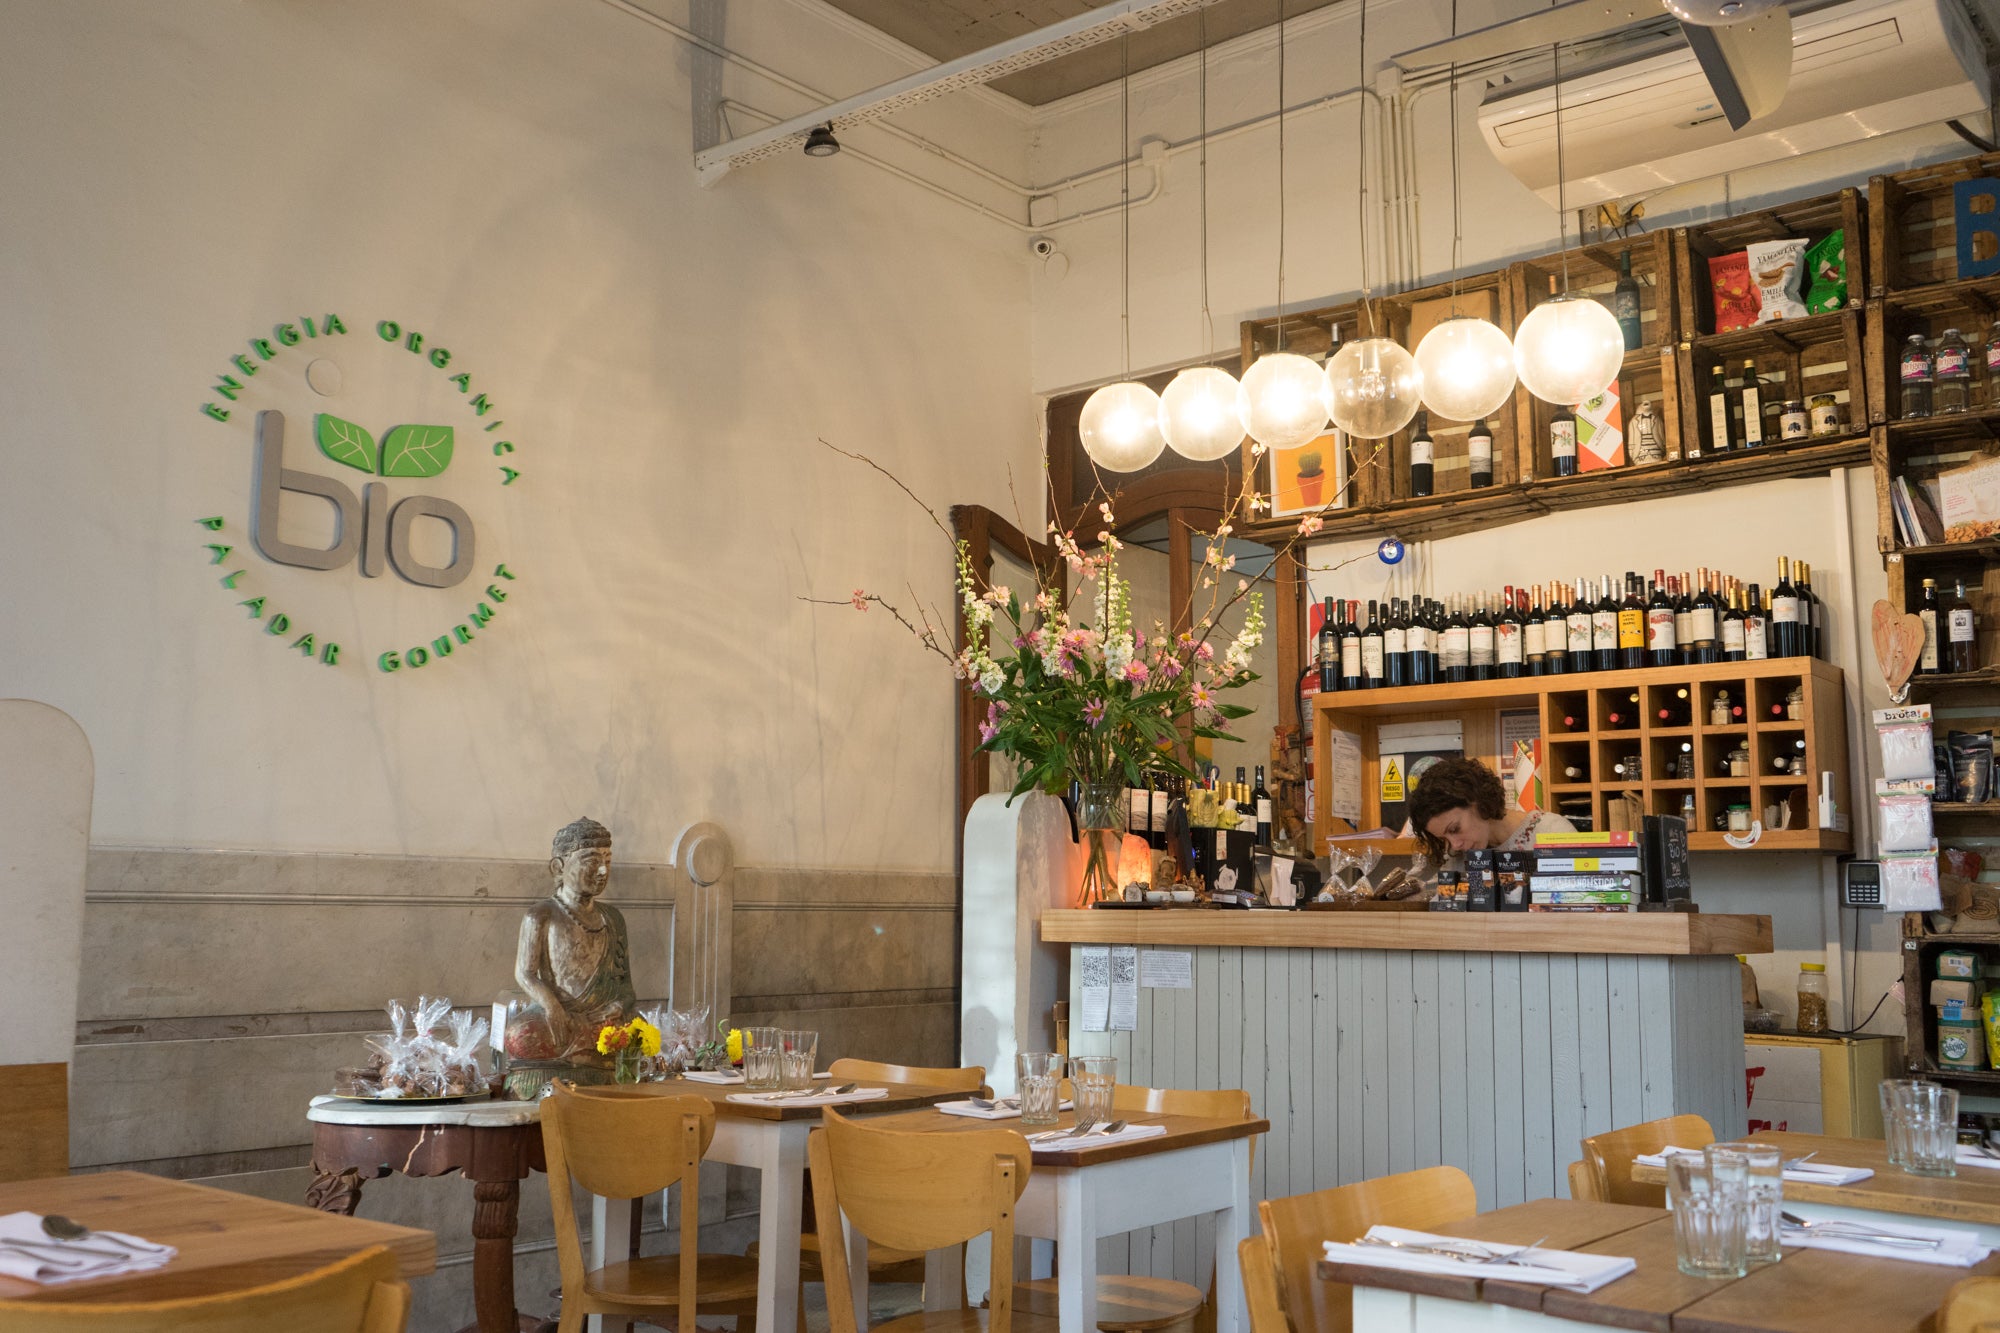 Argentina’s first certified organic restaurant, Bio Solo Organico